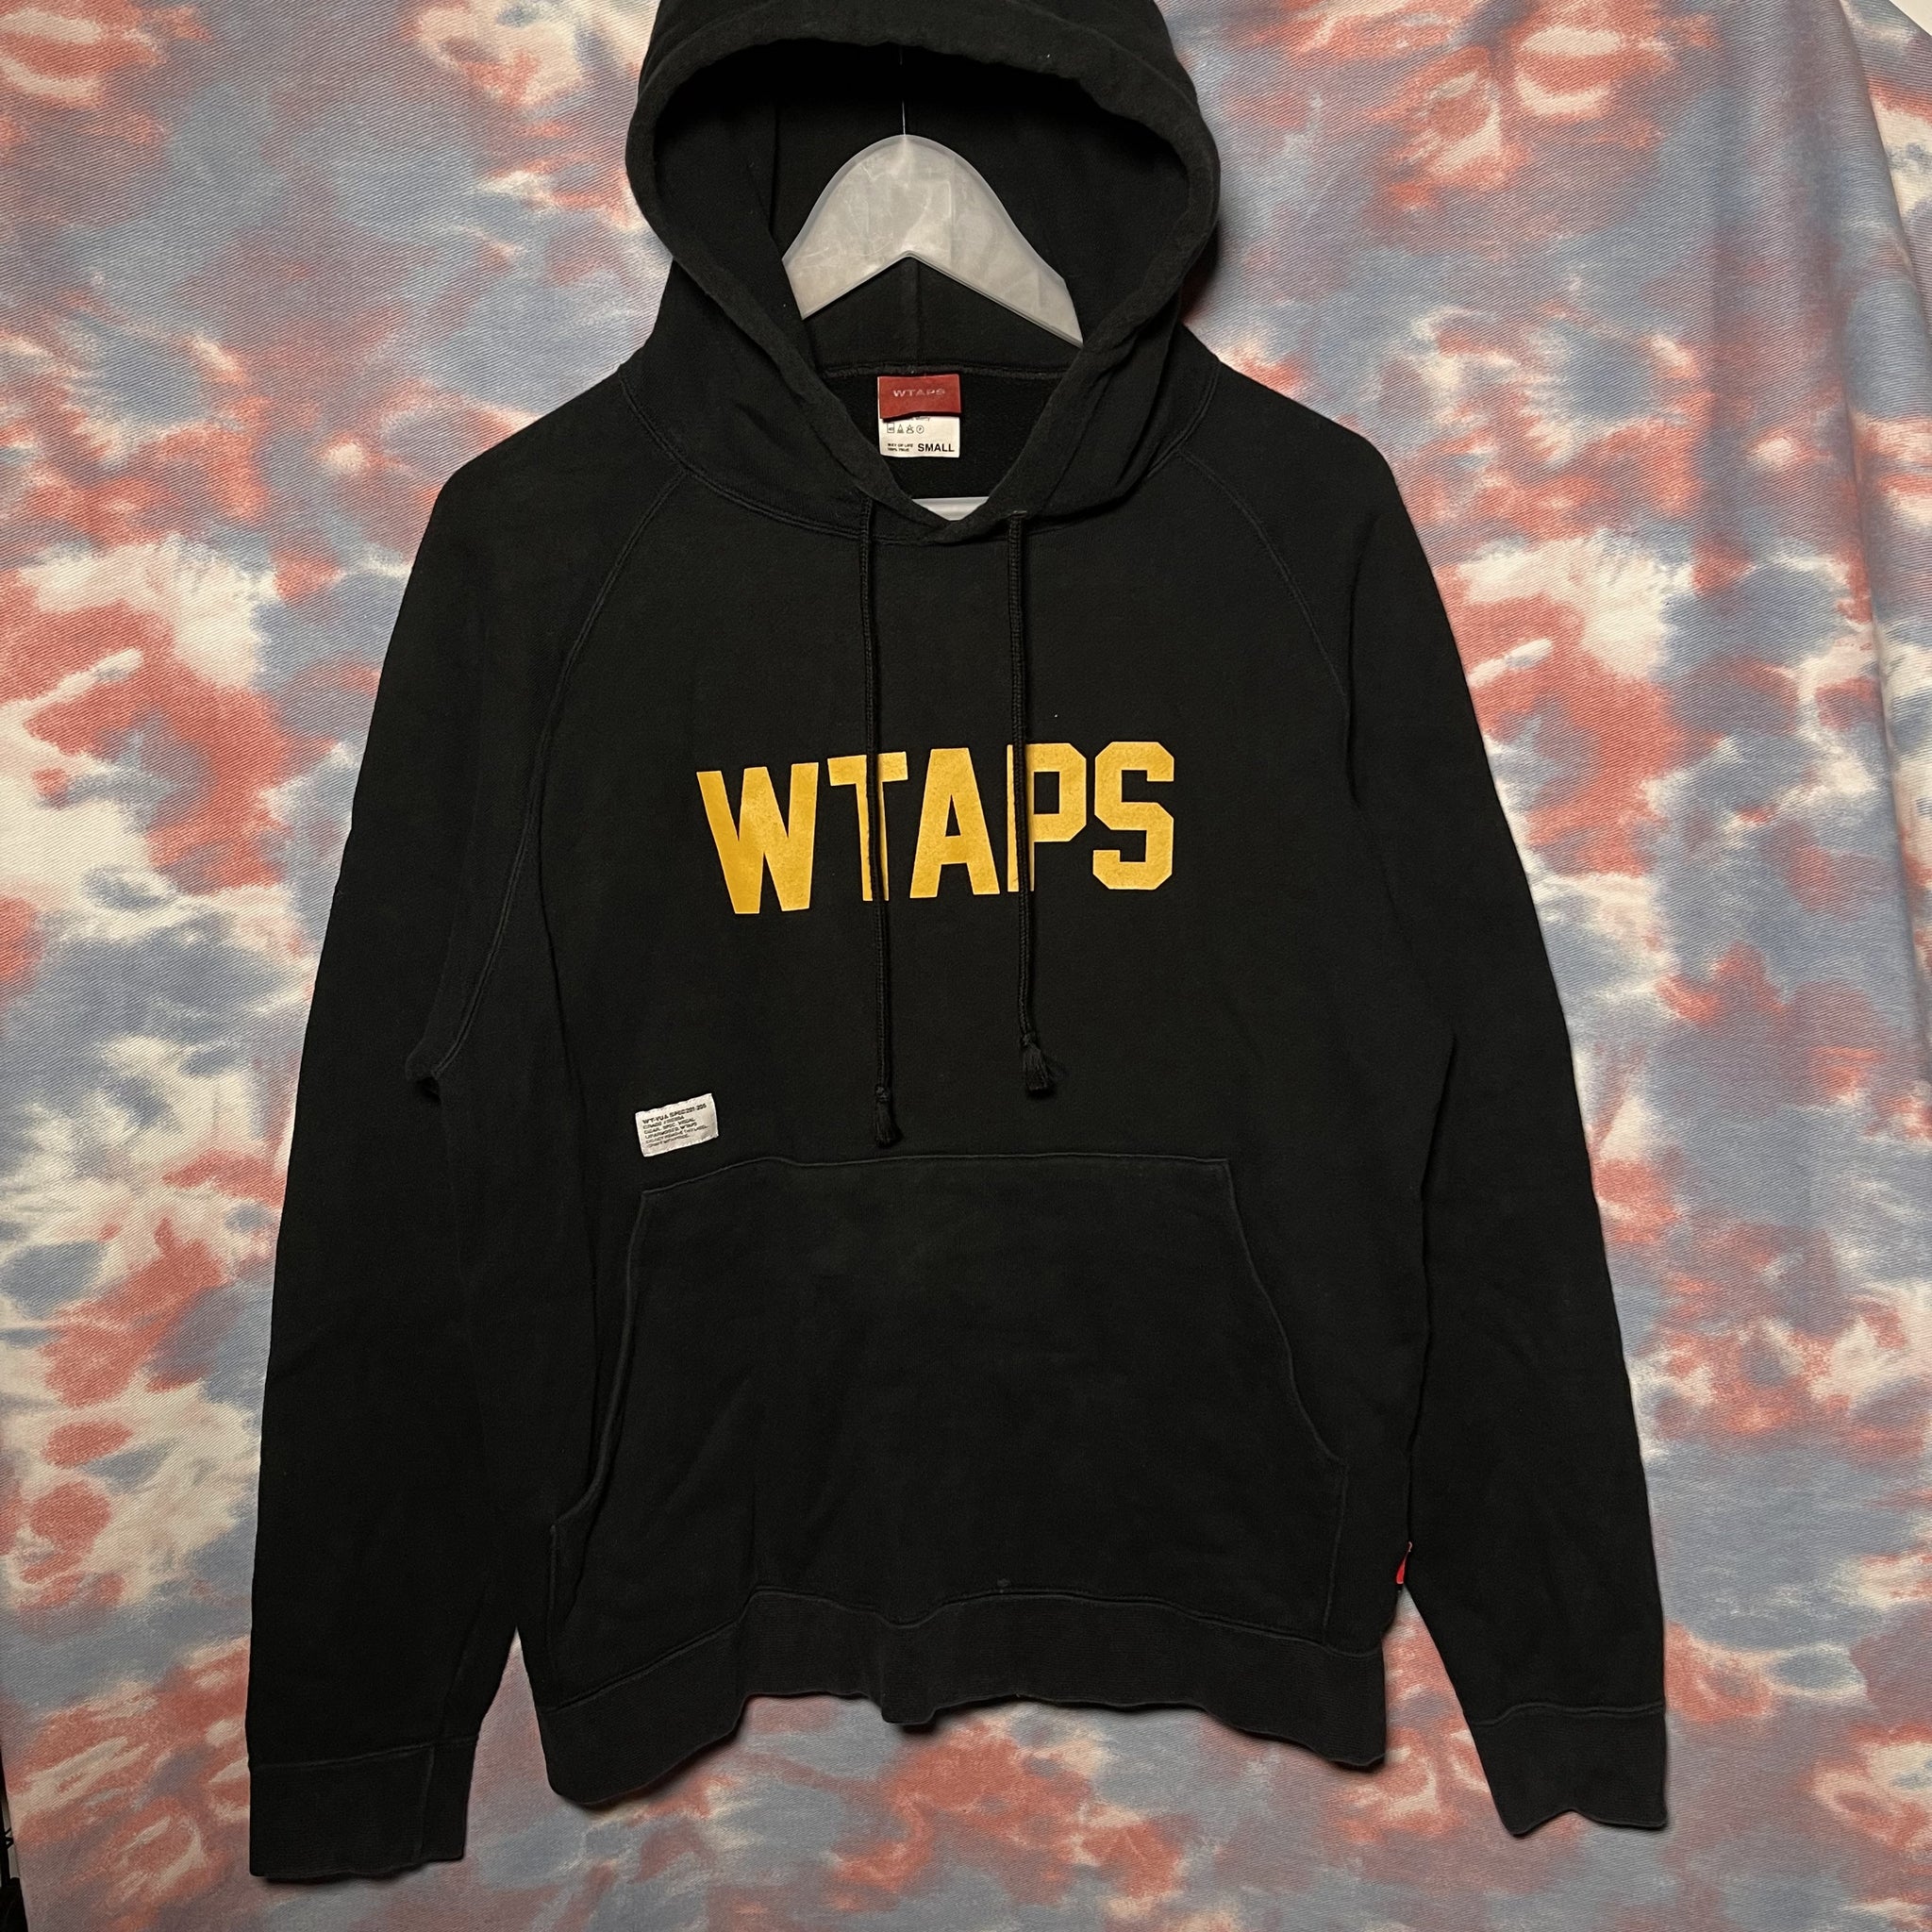 Wtaps screen logo fleece hoodie black size S 黑色抓毛有帽衛衣